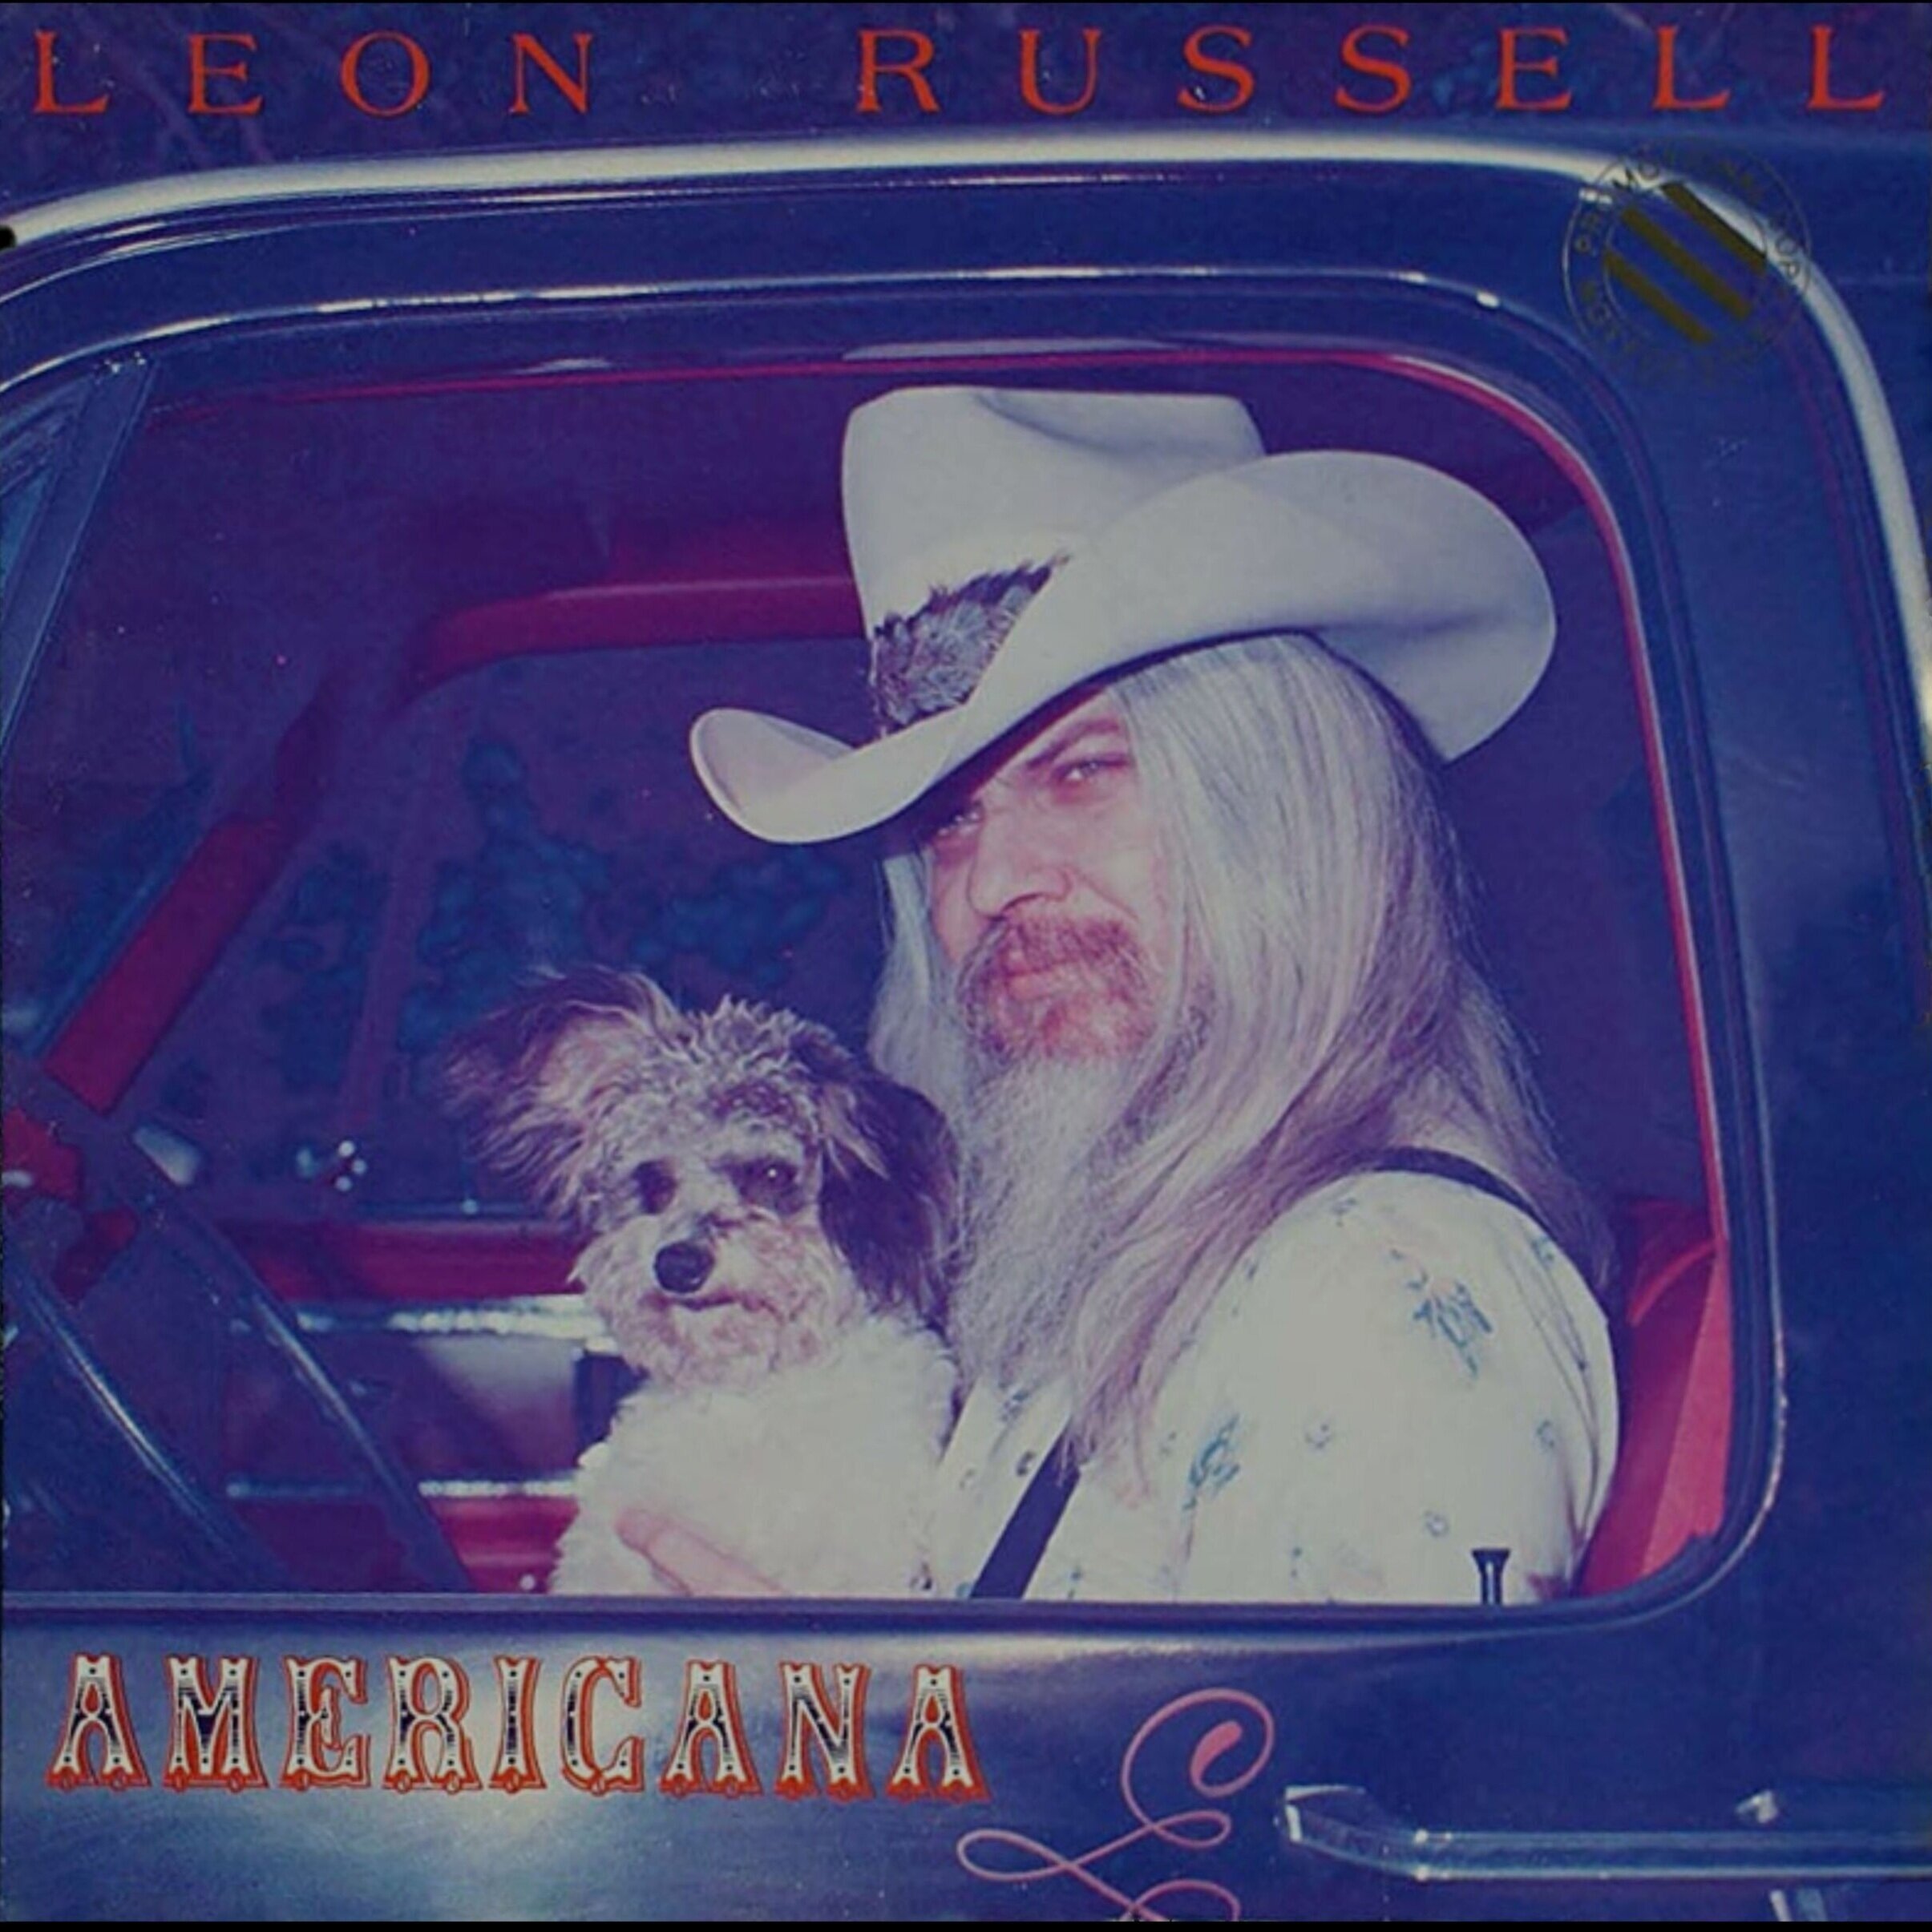 Americana, Leon Russell, album cover 1978